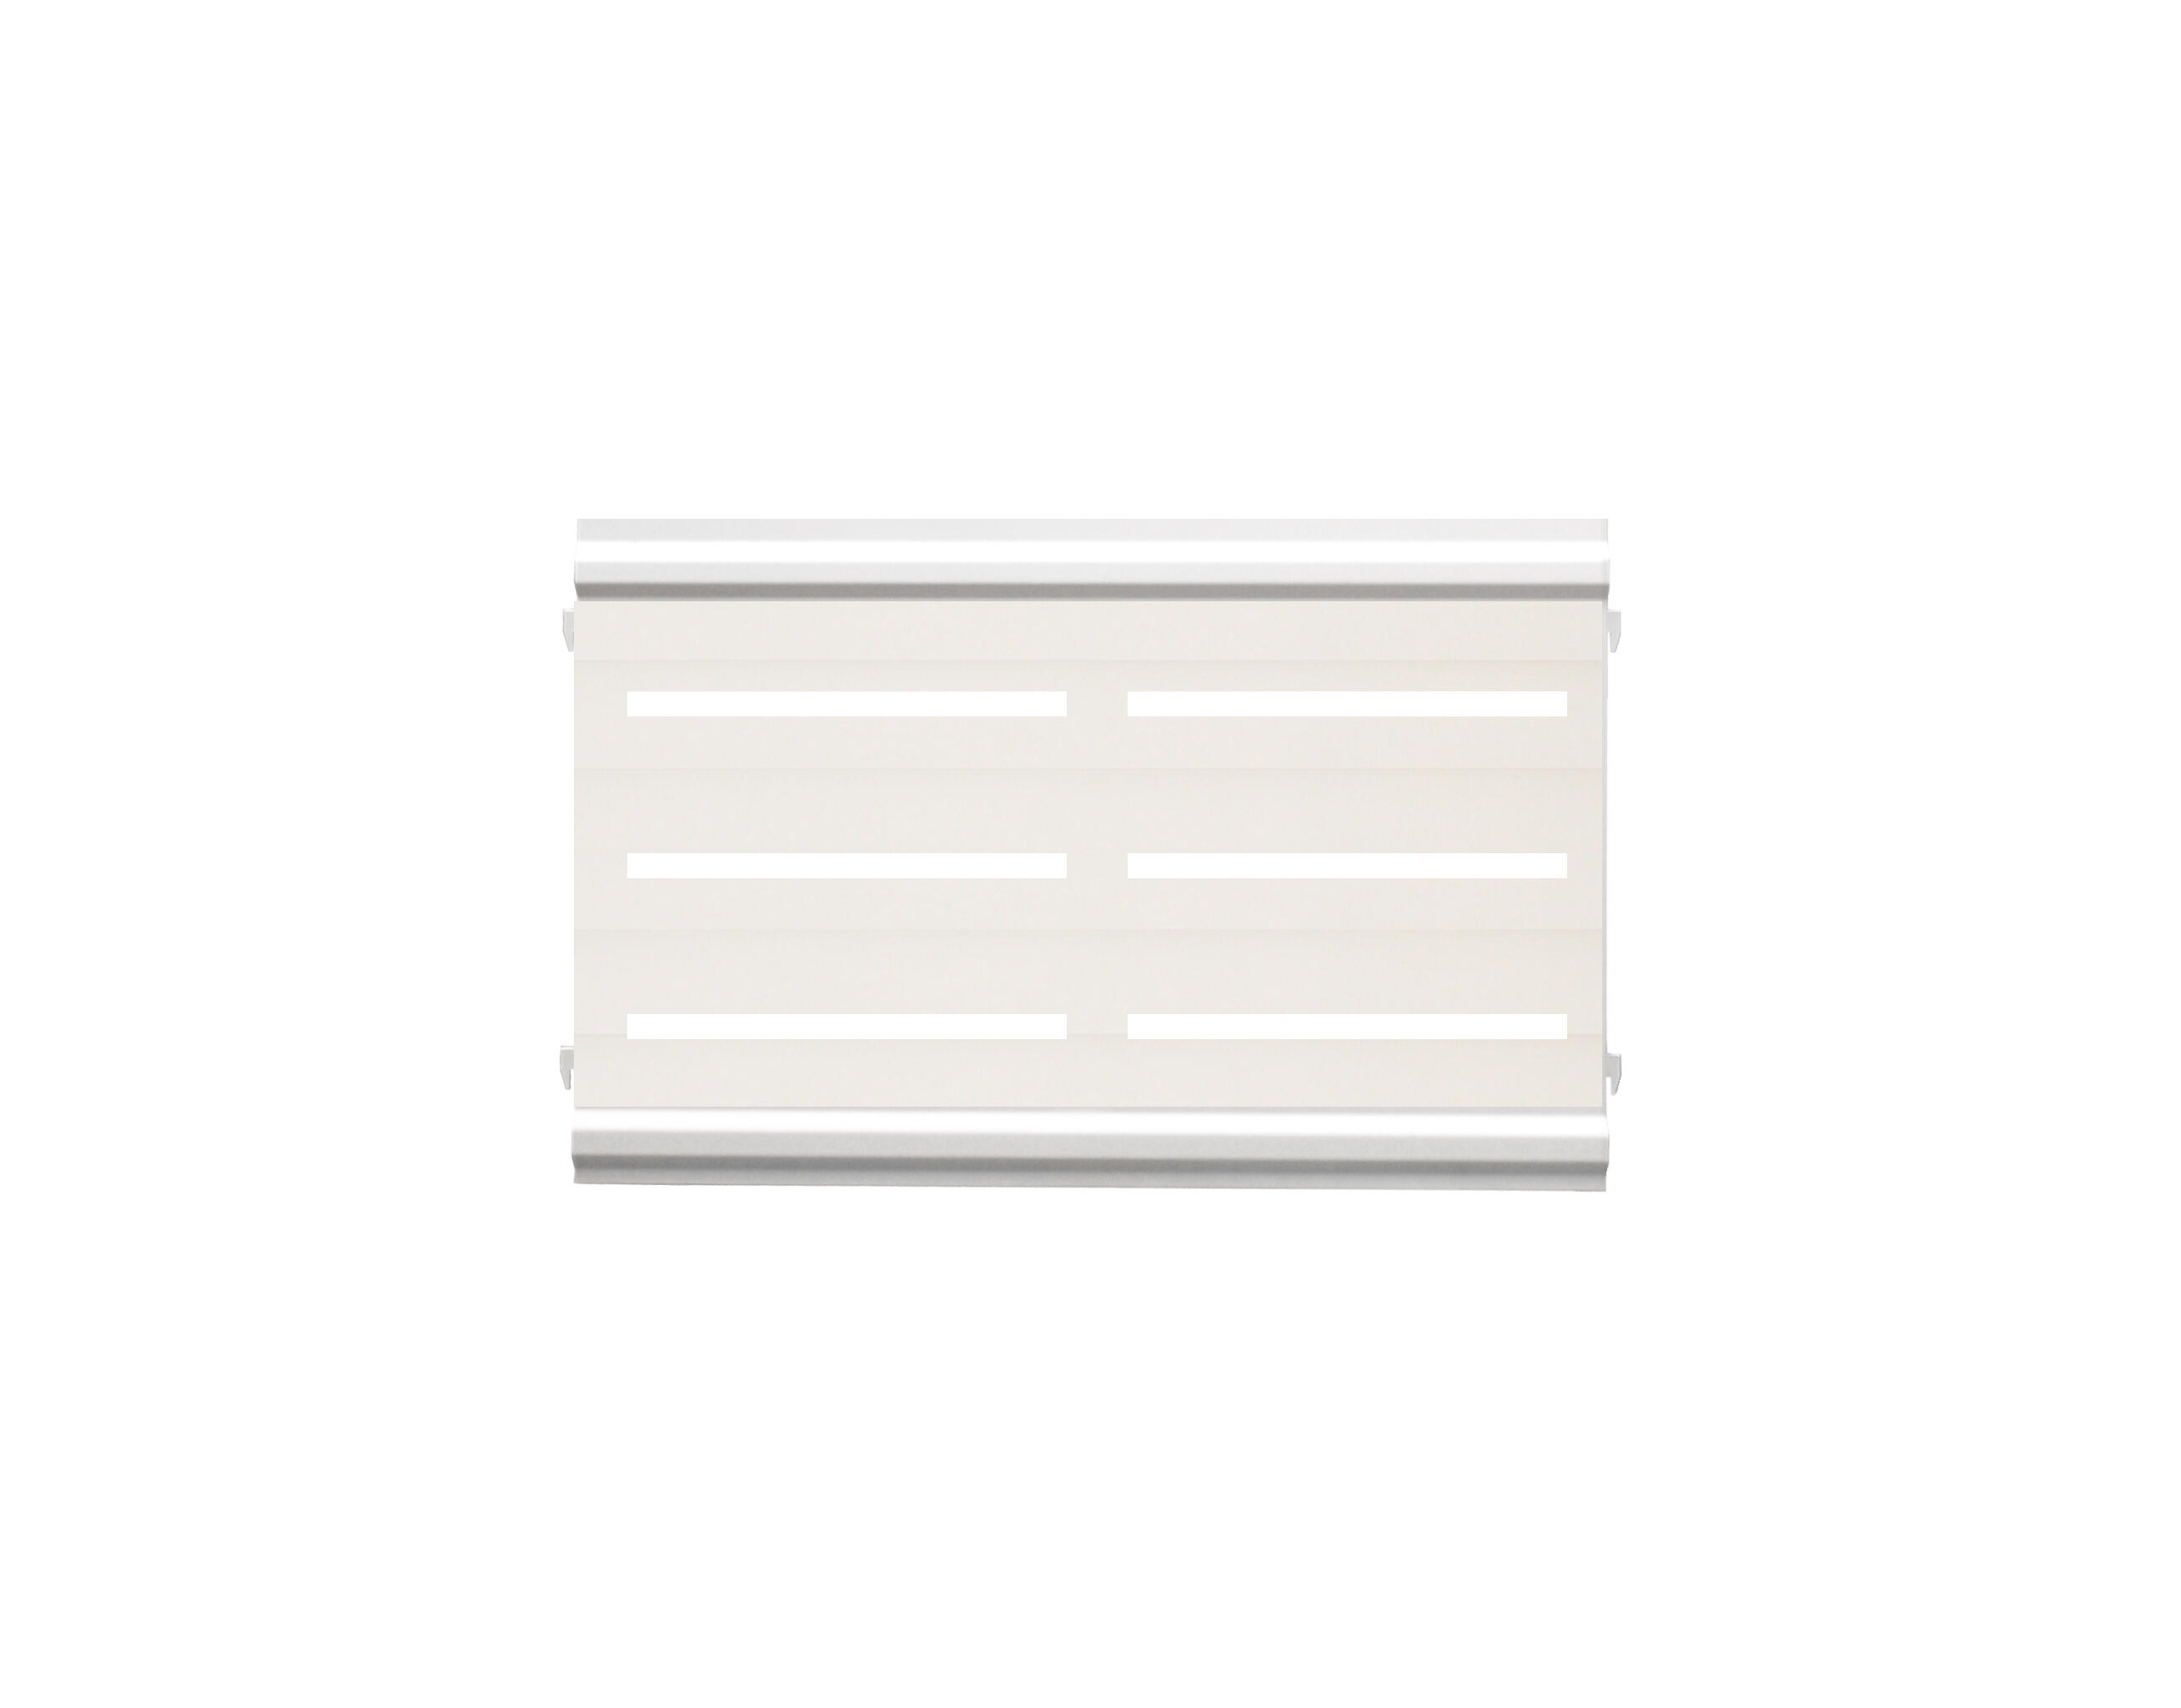 Panel remate valla acero galvanizado franja rayas blanco 44x73,5 cm